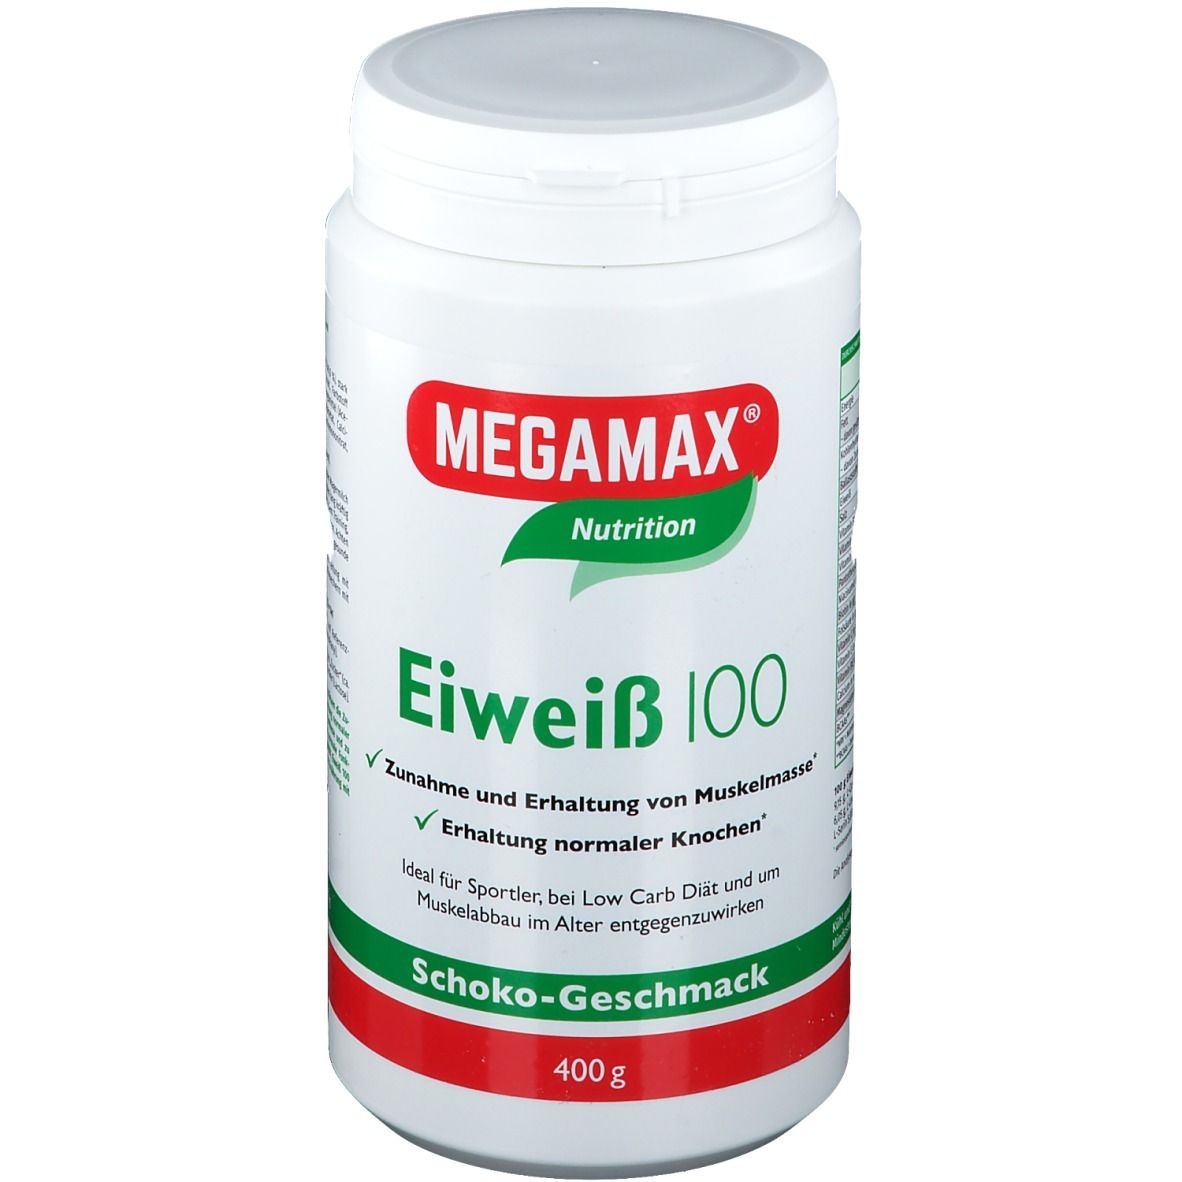 MEGAMAX® Nutrition Eiweiß 100 Schoko-Geschmack